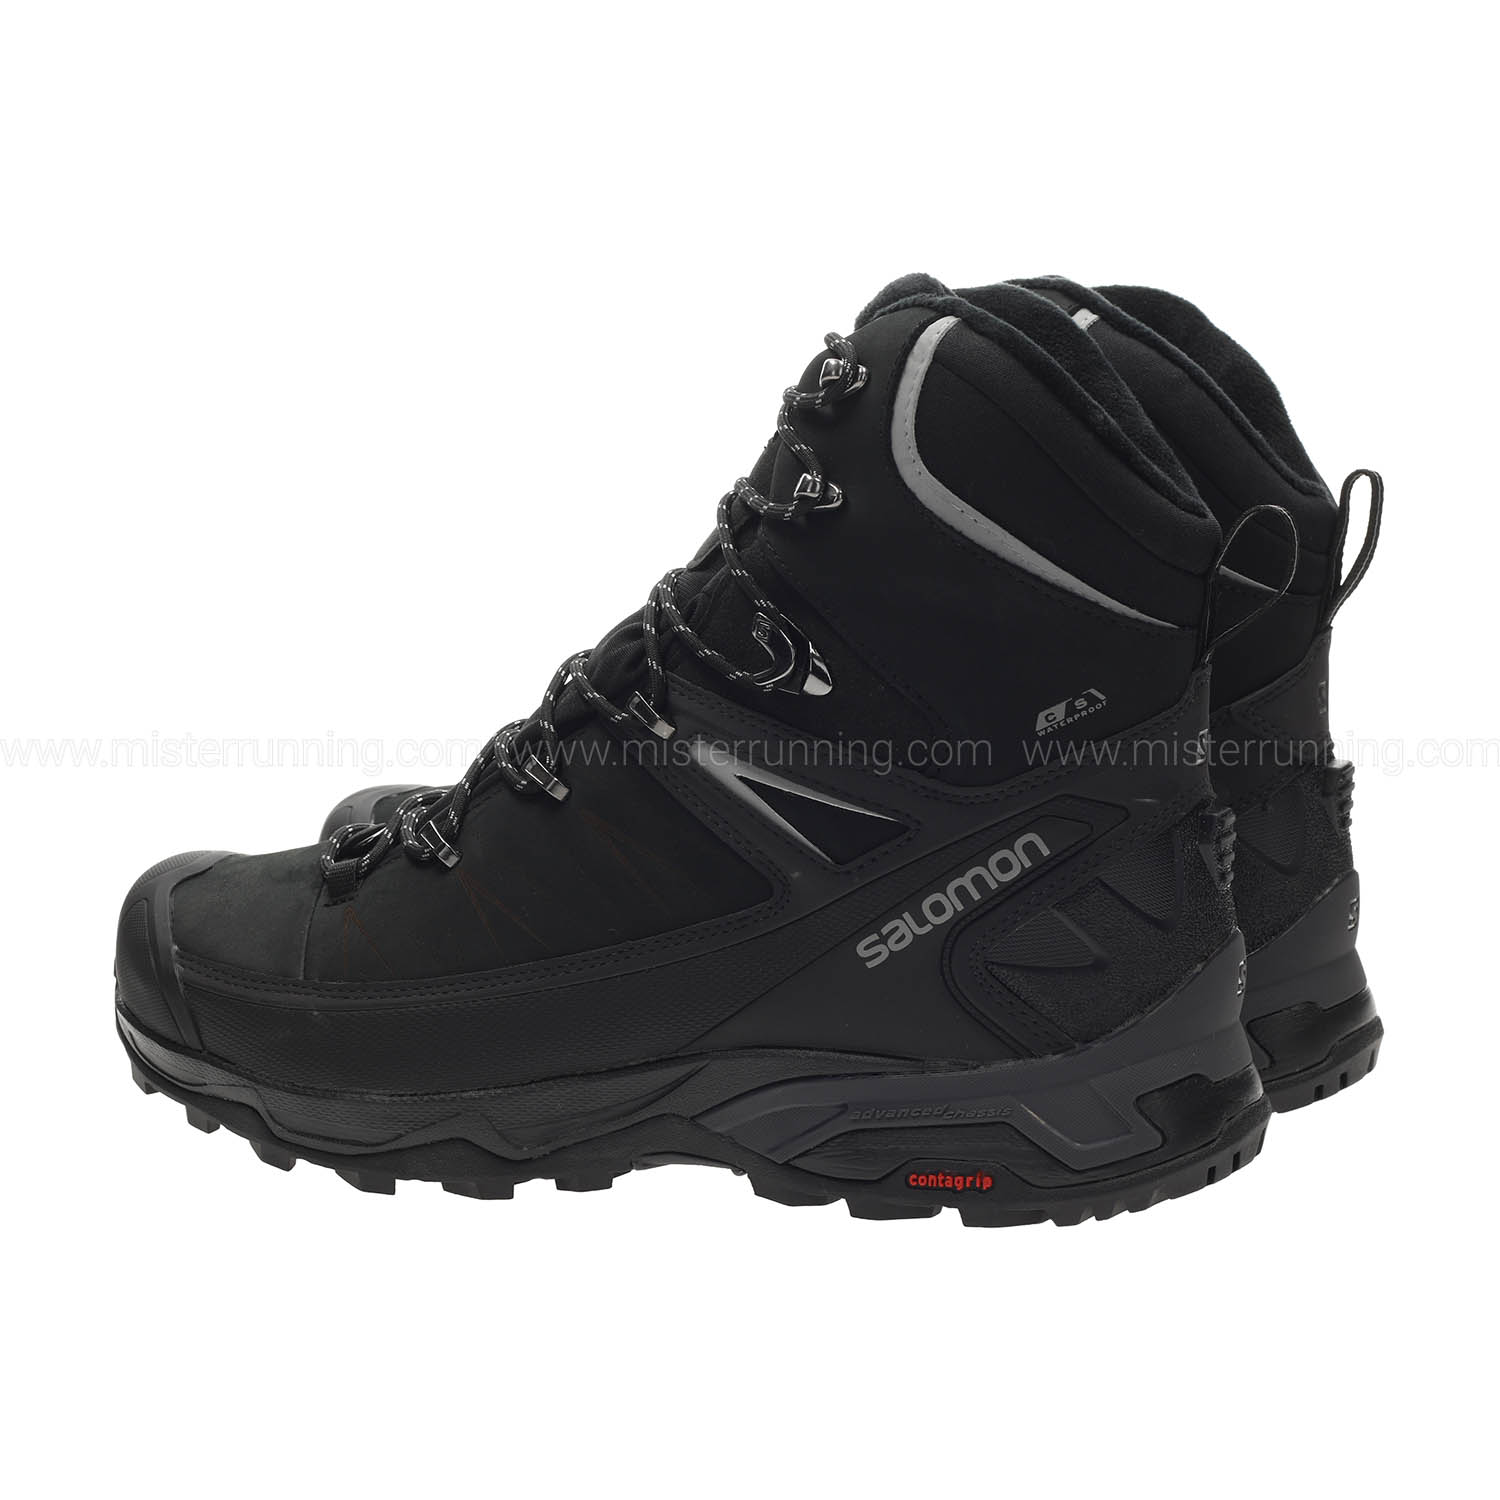 salomon x ultra 2 cs waterproof winter boots